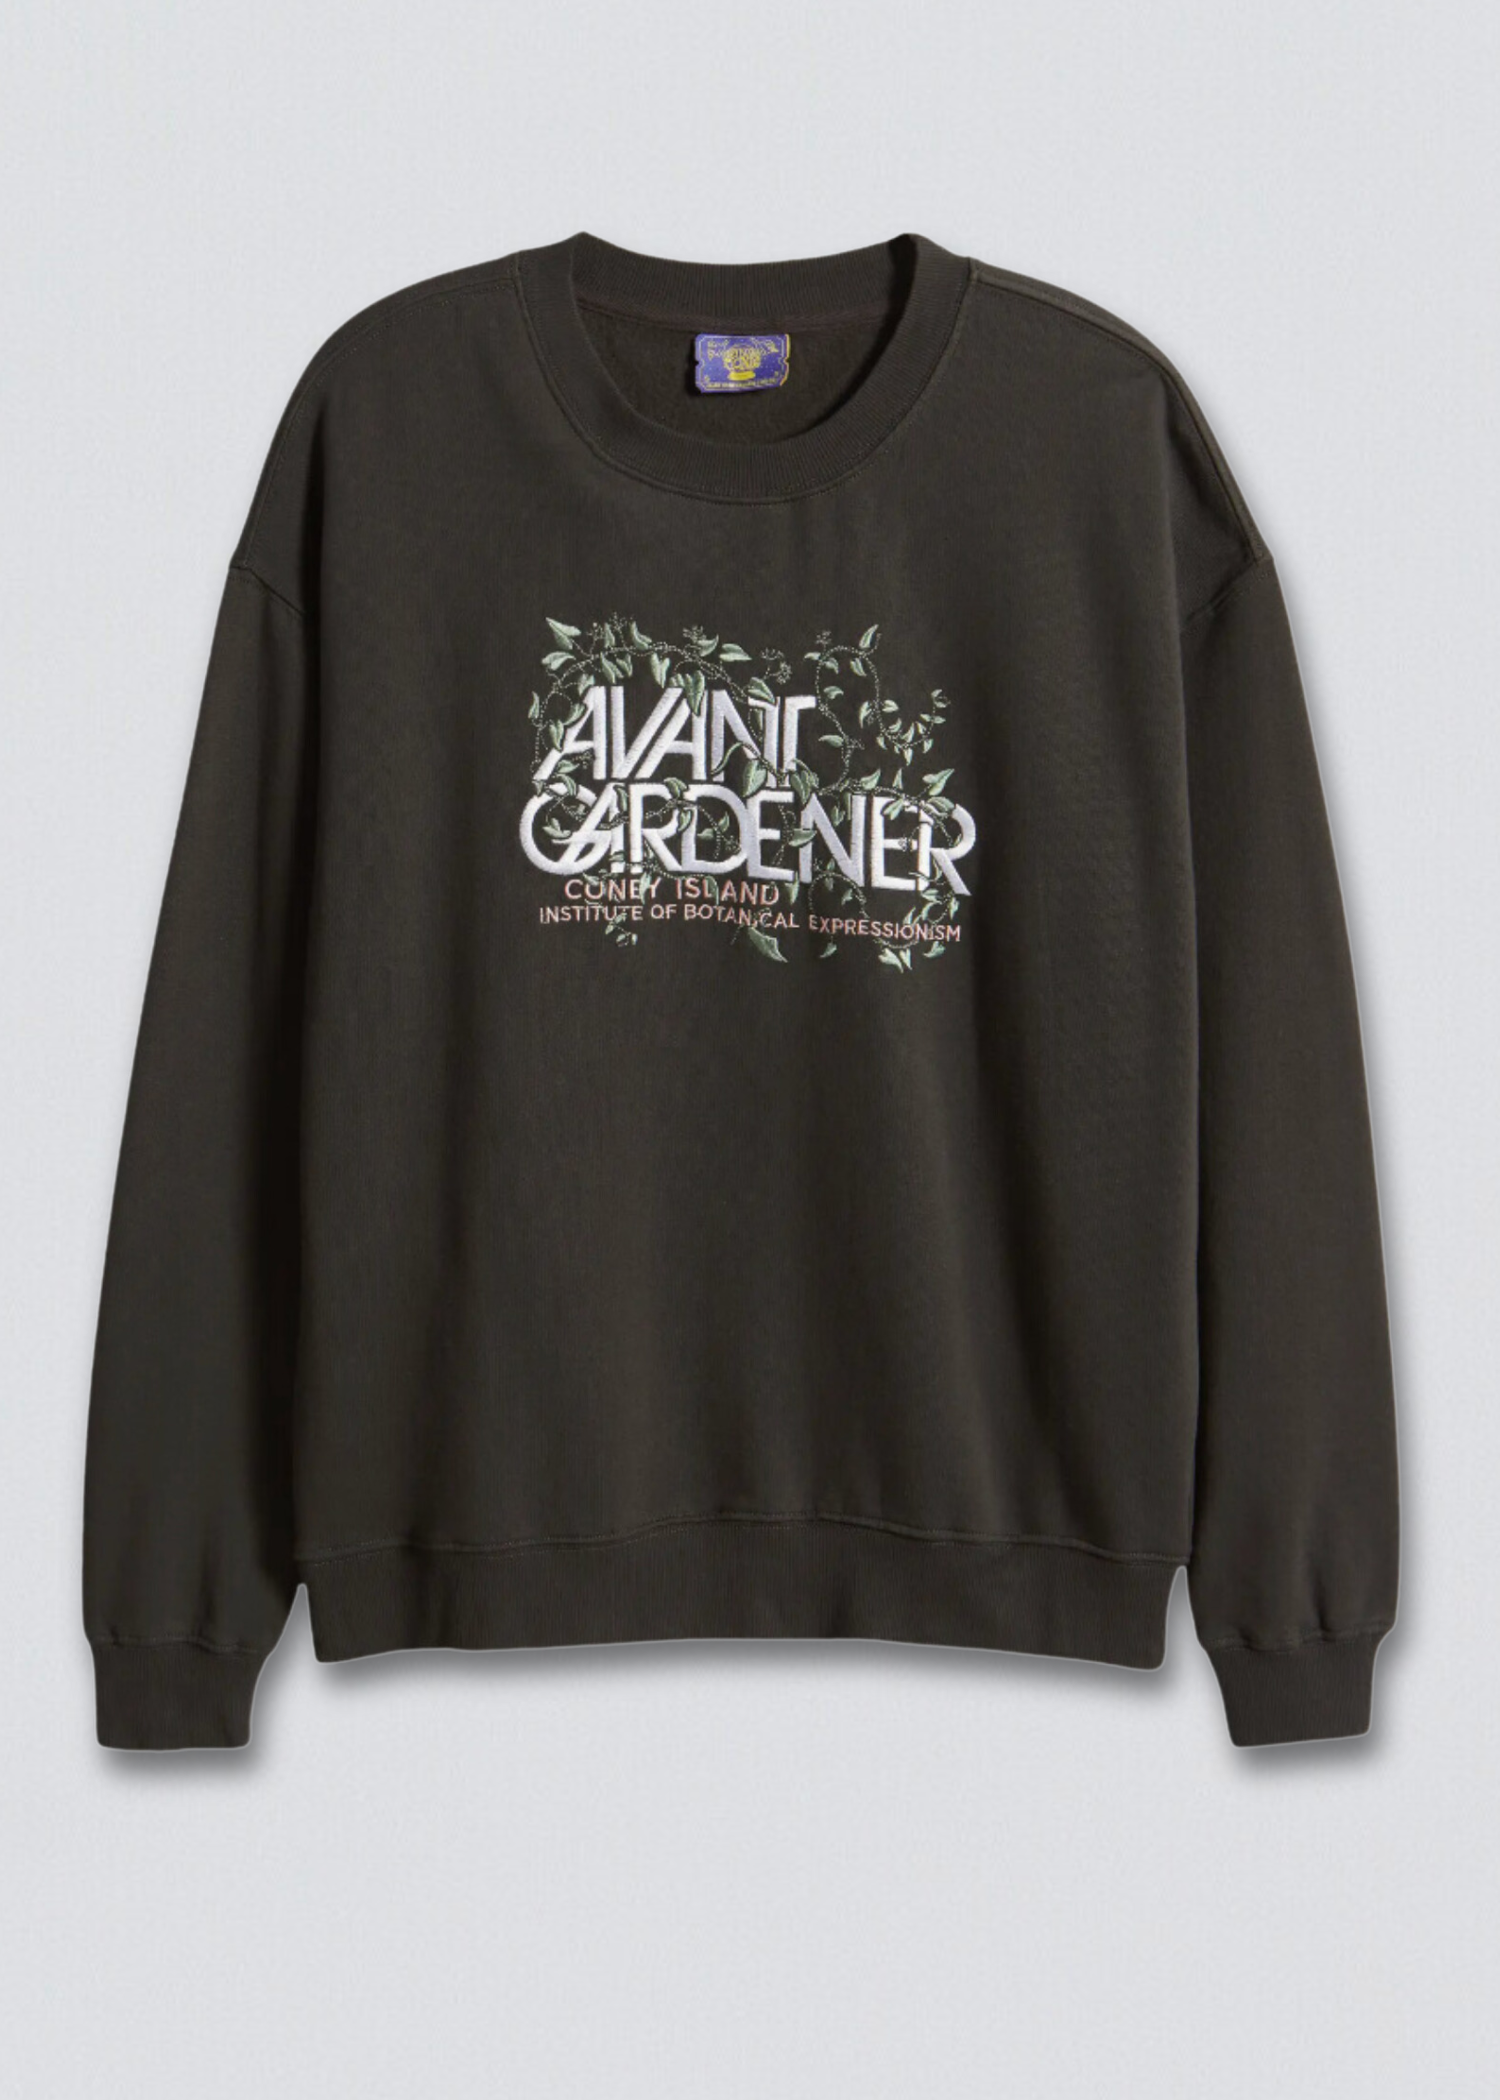 Avant Gardener Embroidered Graphic Sweatshirt